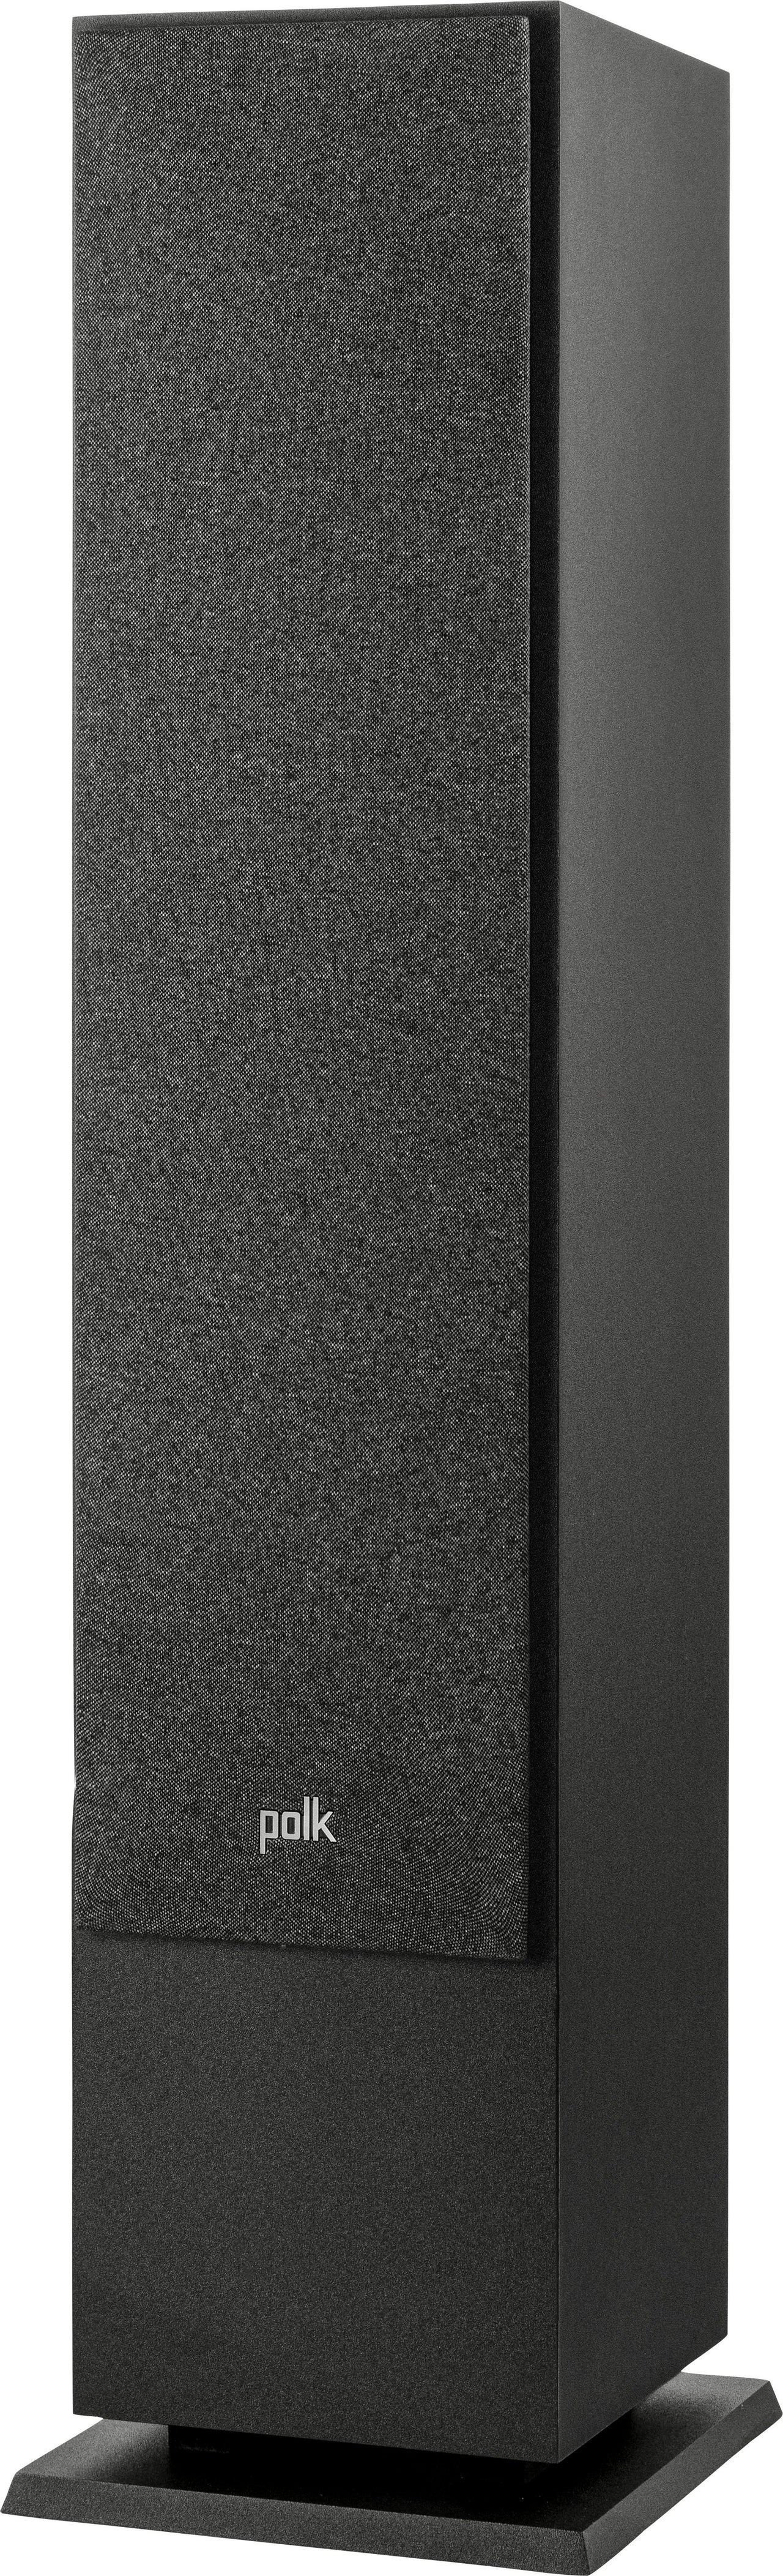 Polk Audio - Monitor XT60 Tower Speaker - Midnight Black